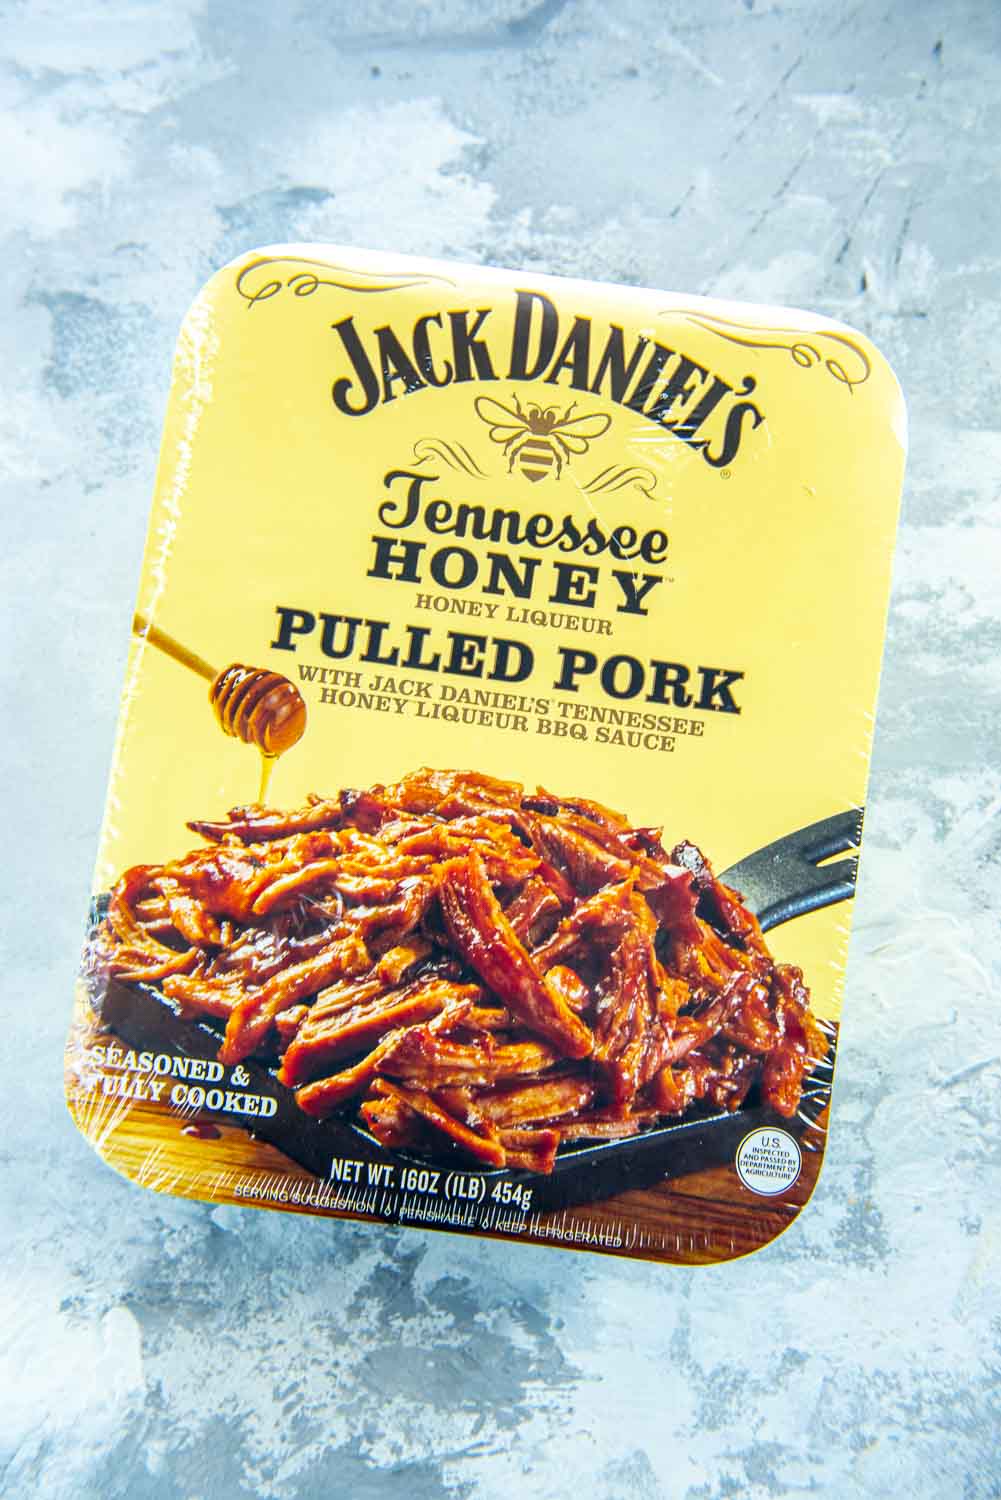 1lb Jack Daniels Tennessee Honey pulled pork